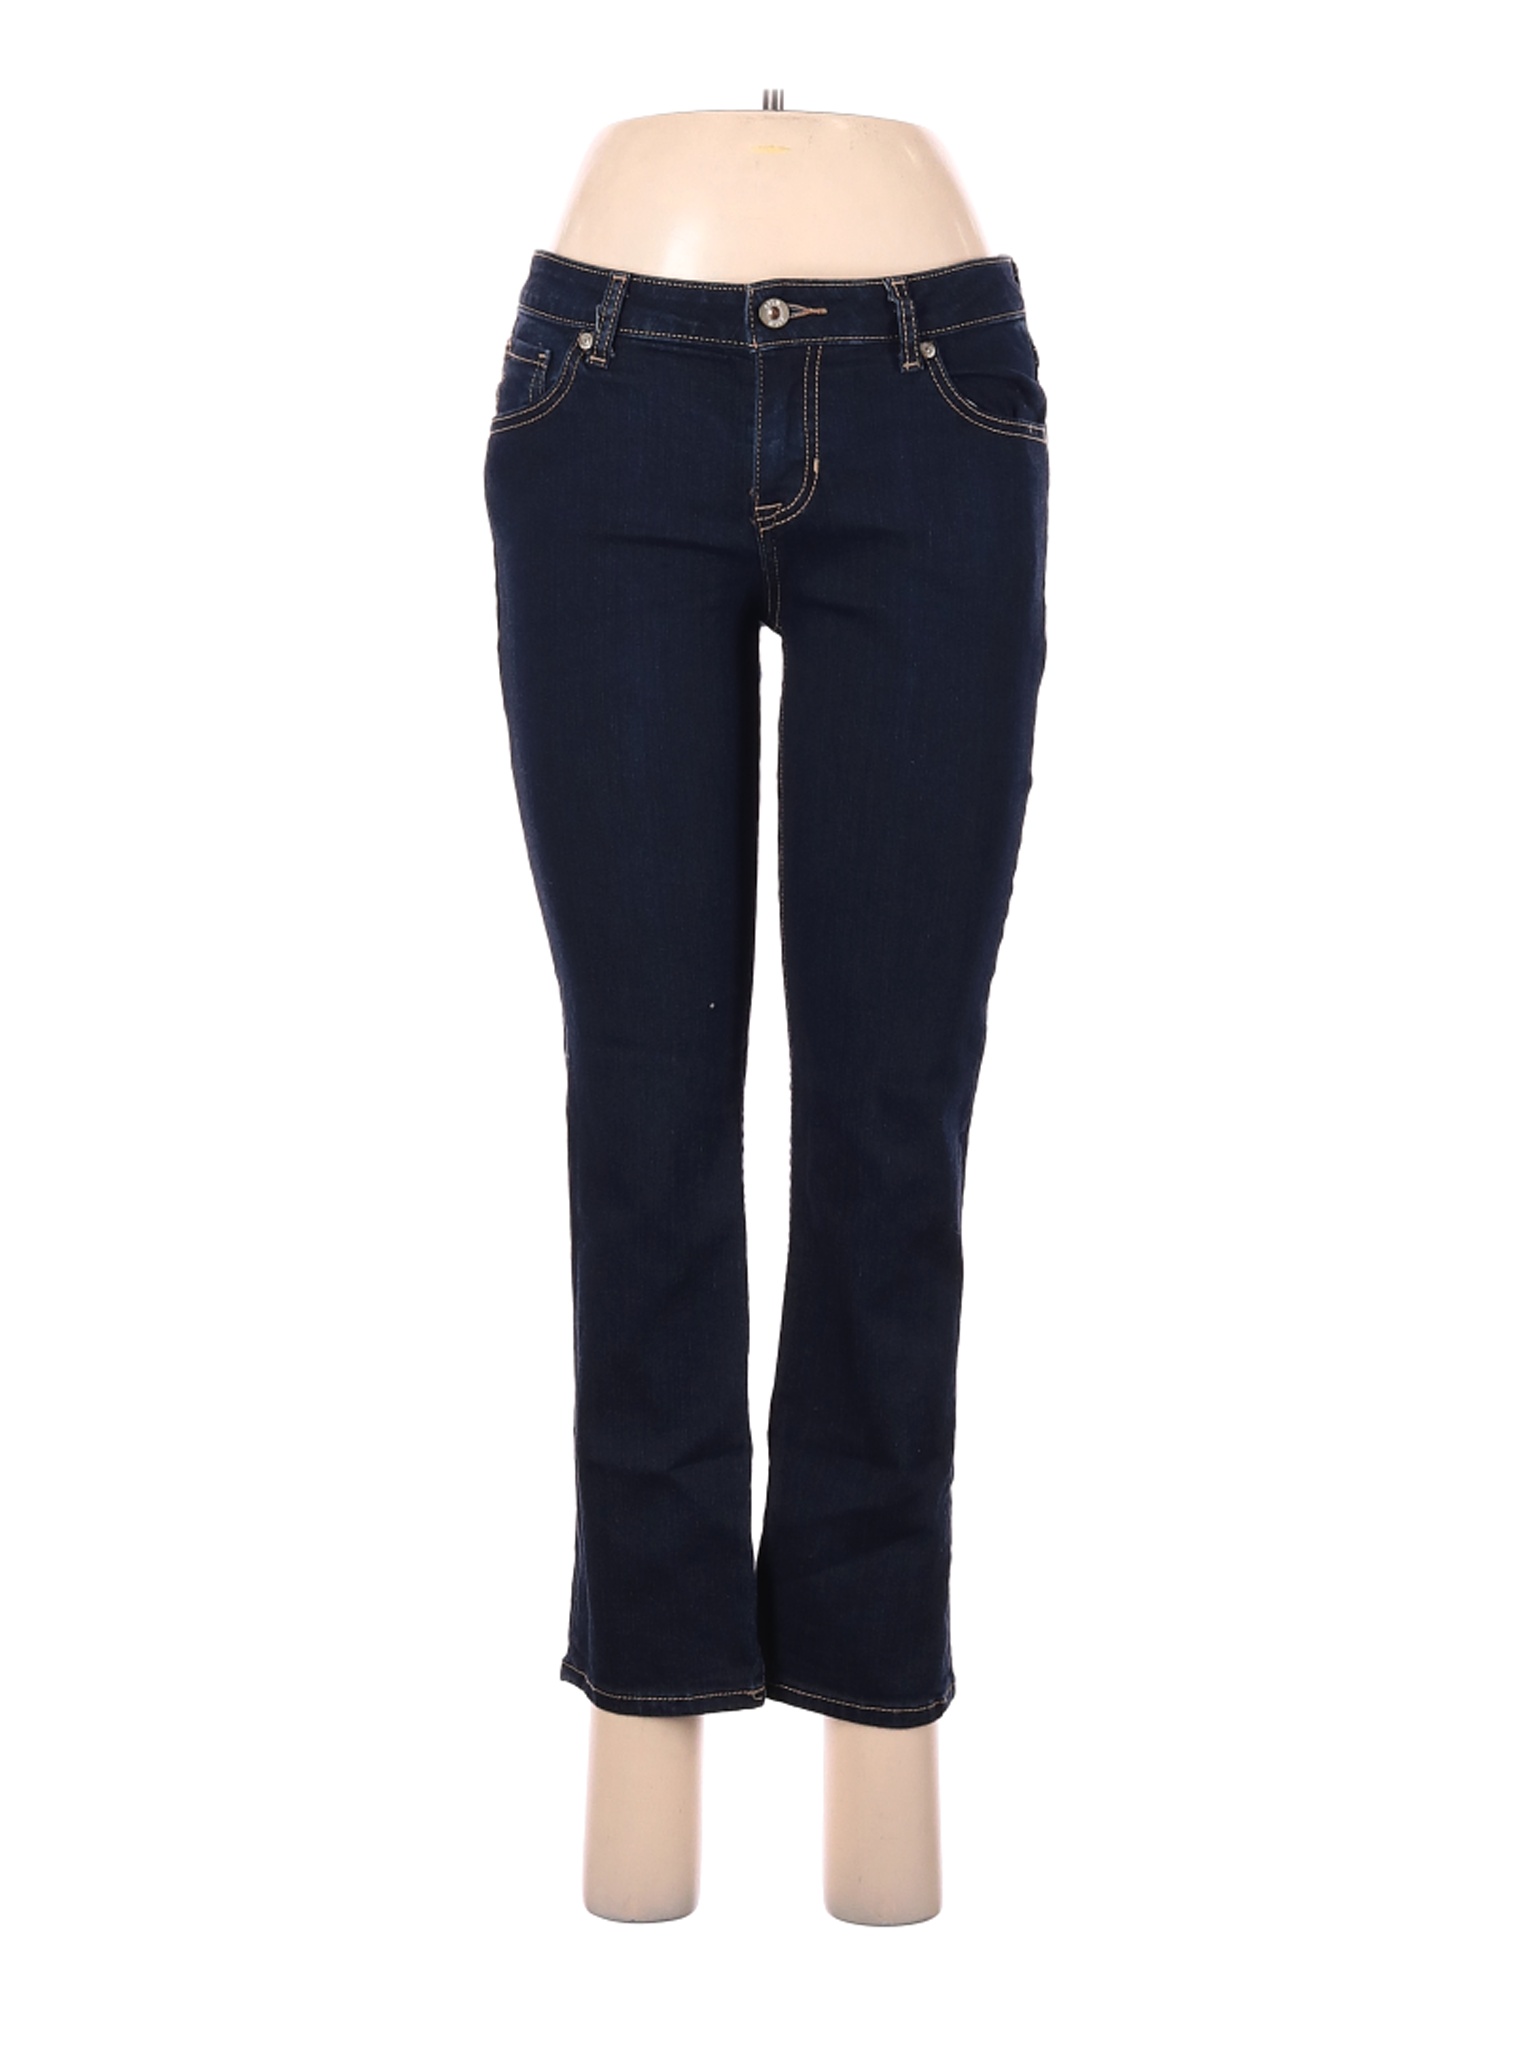 Apt. 9 Women Blue Jeans 6 Petites | eBay